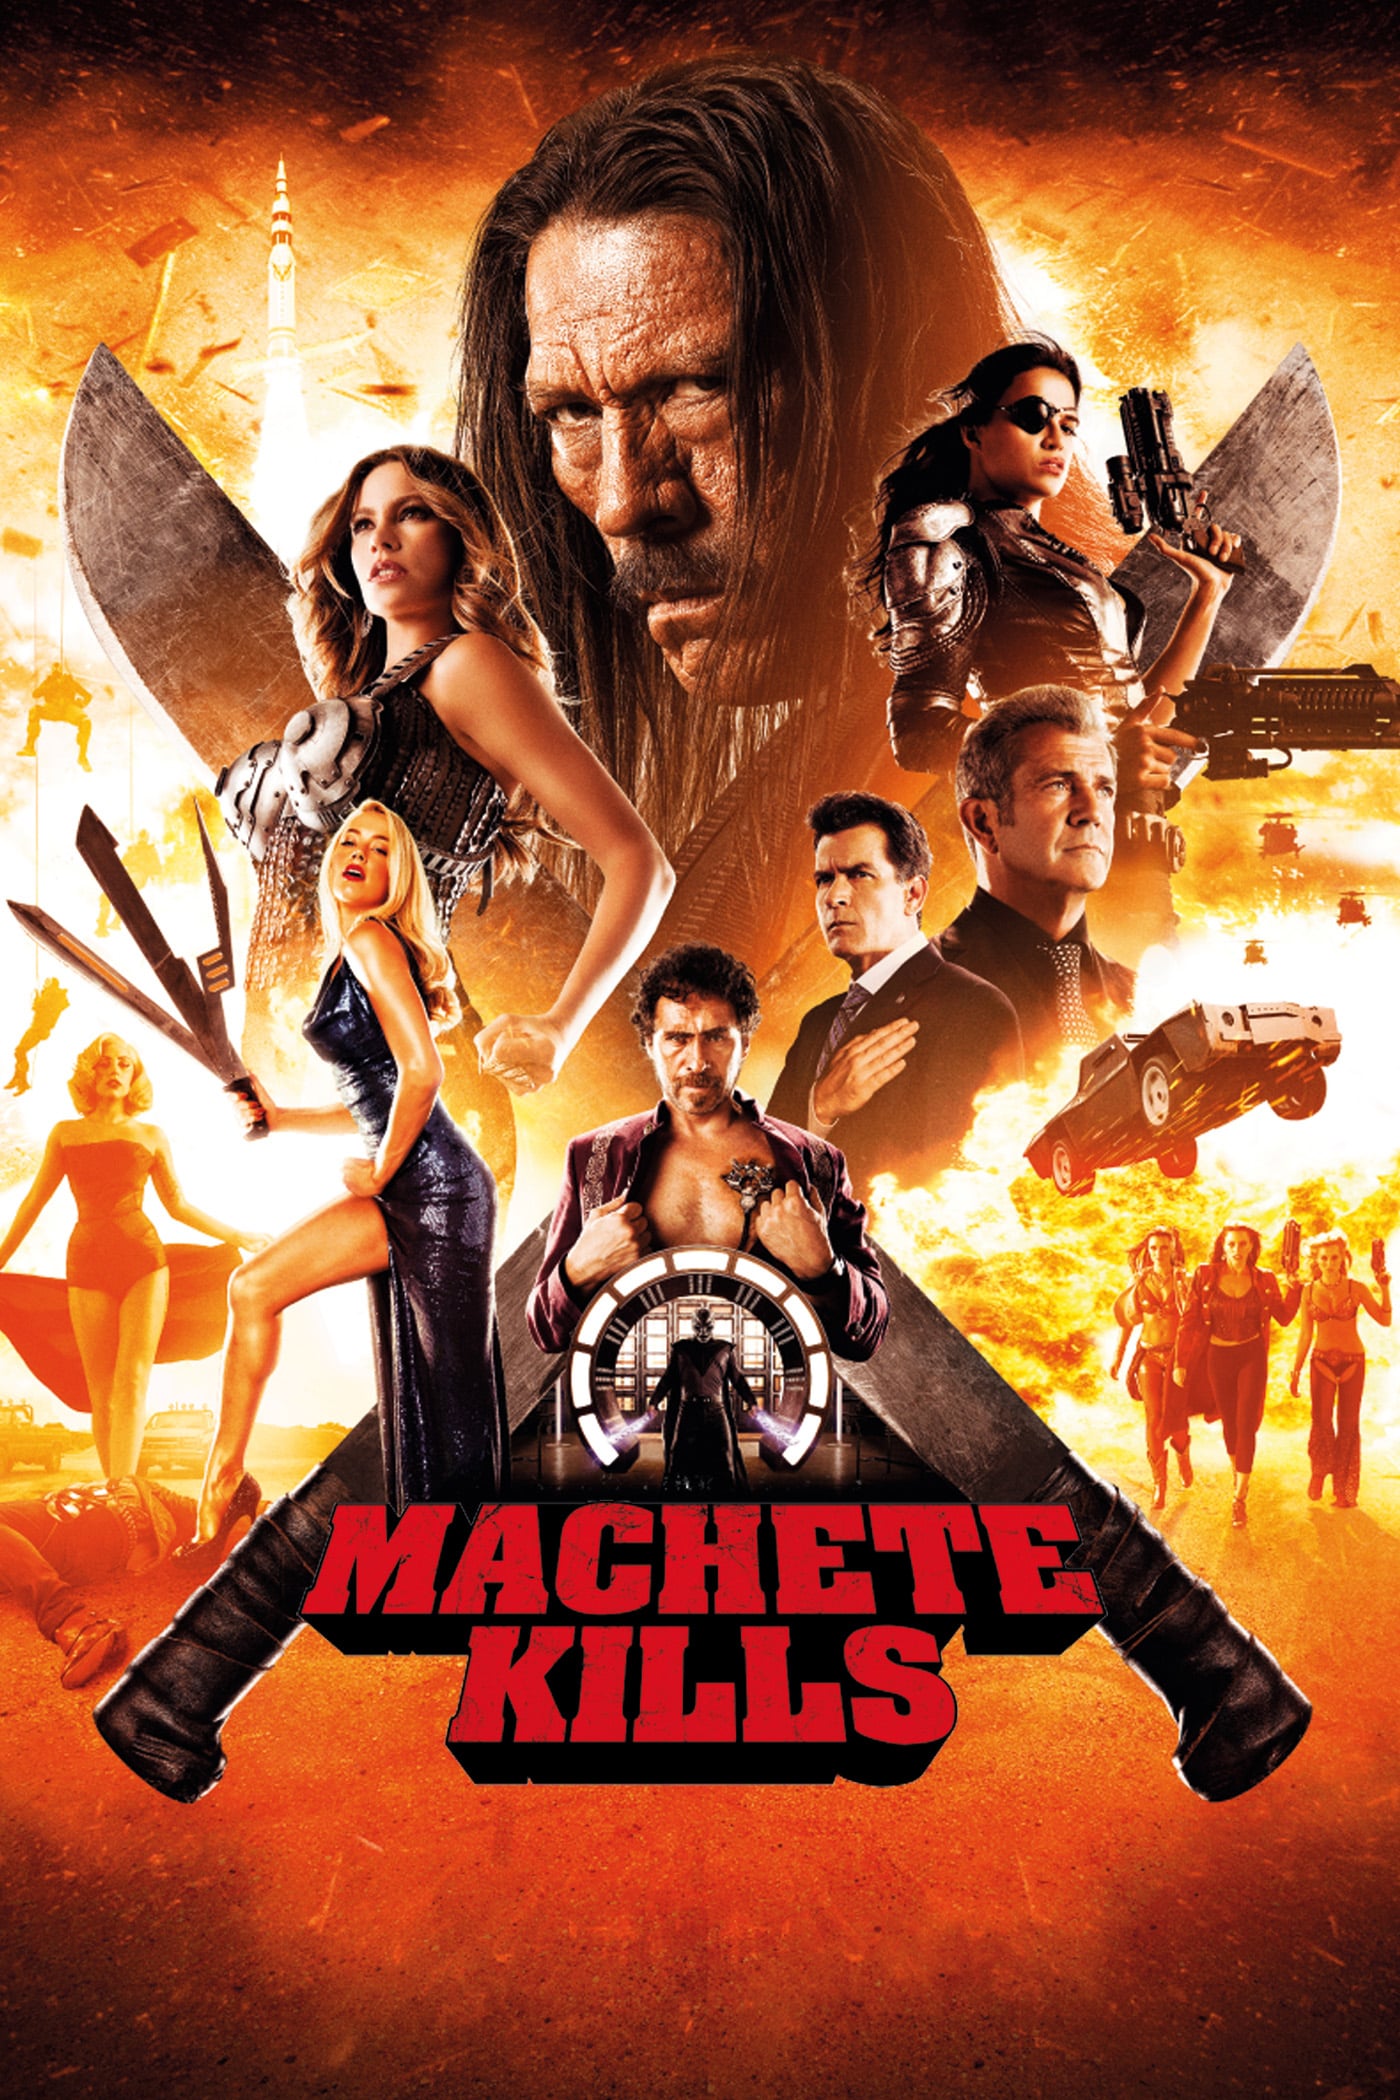 Plakat von "Machete Kills"